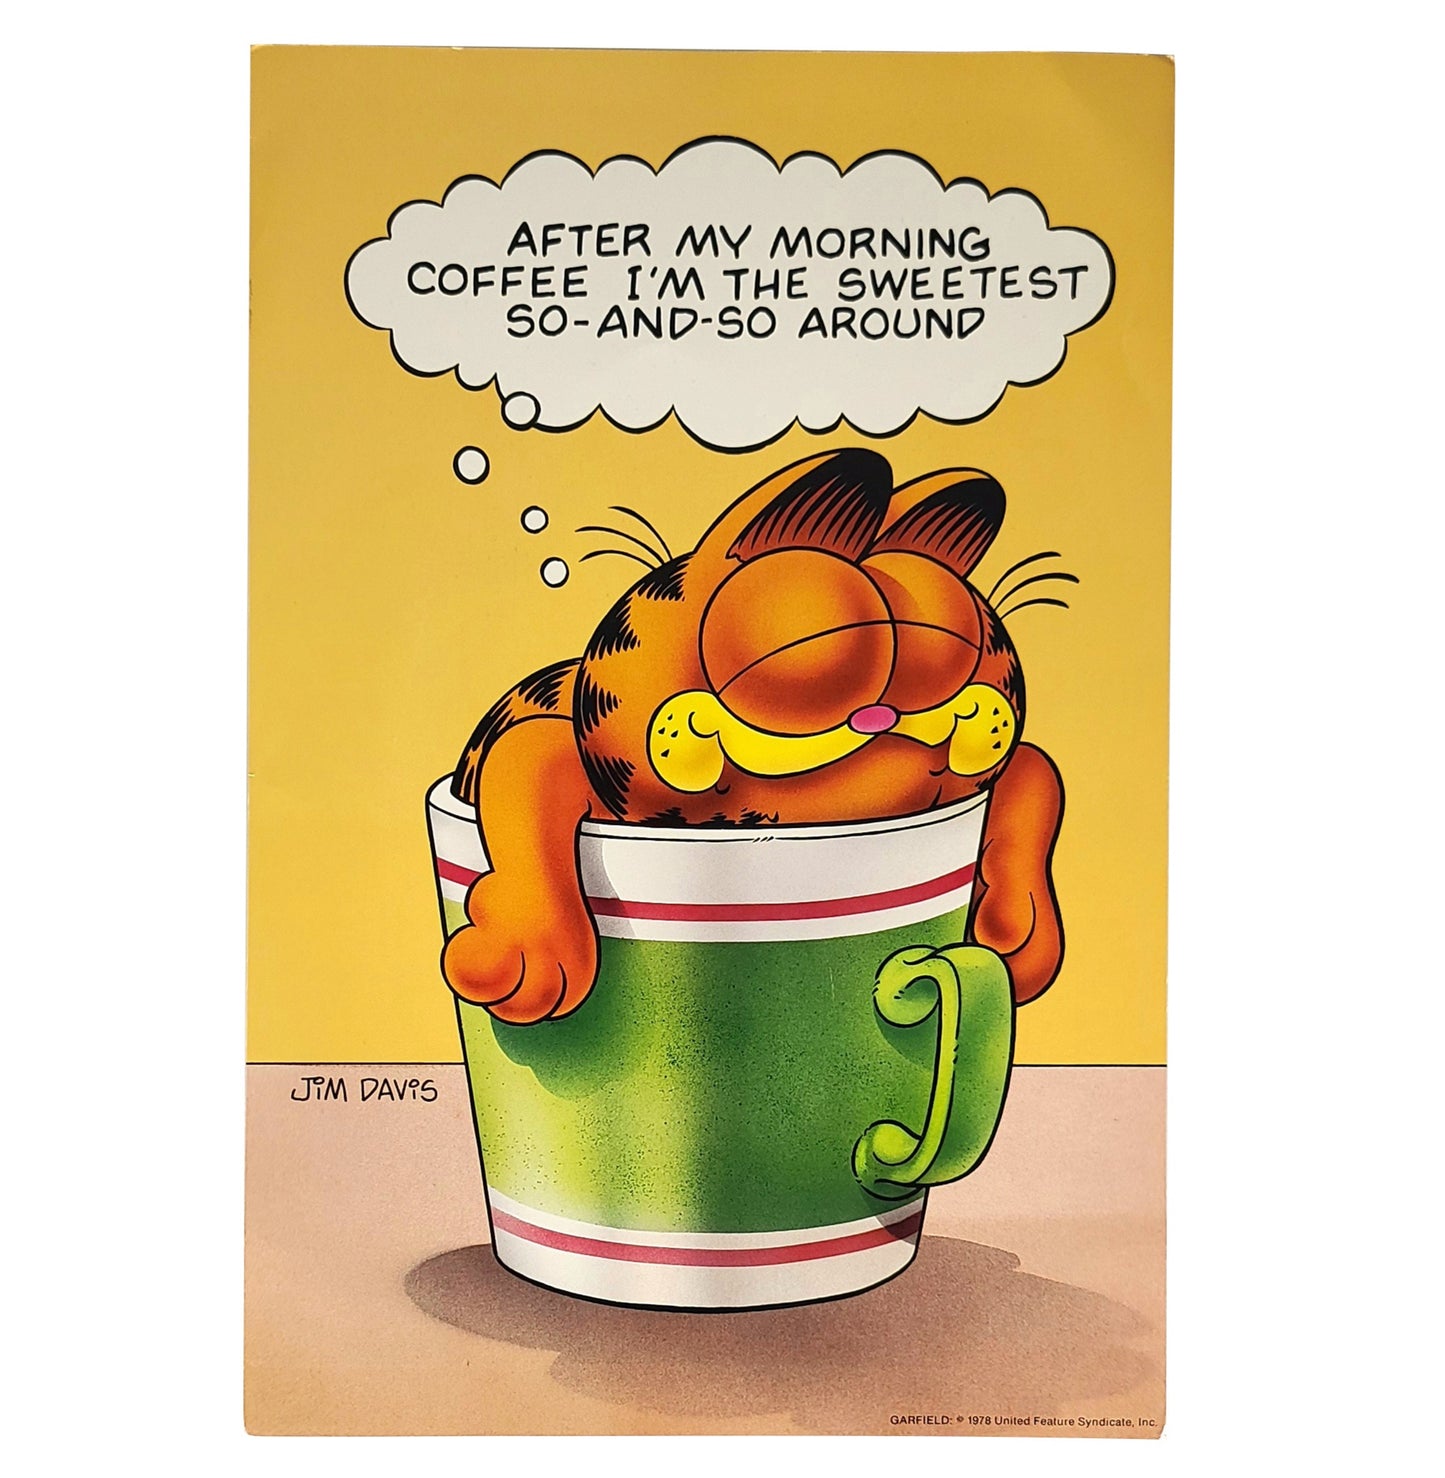 1978 Garfield 'Sweetest Around' Poster